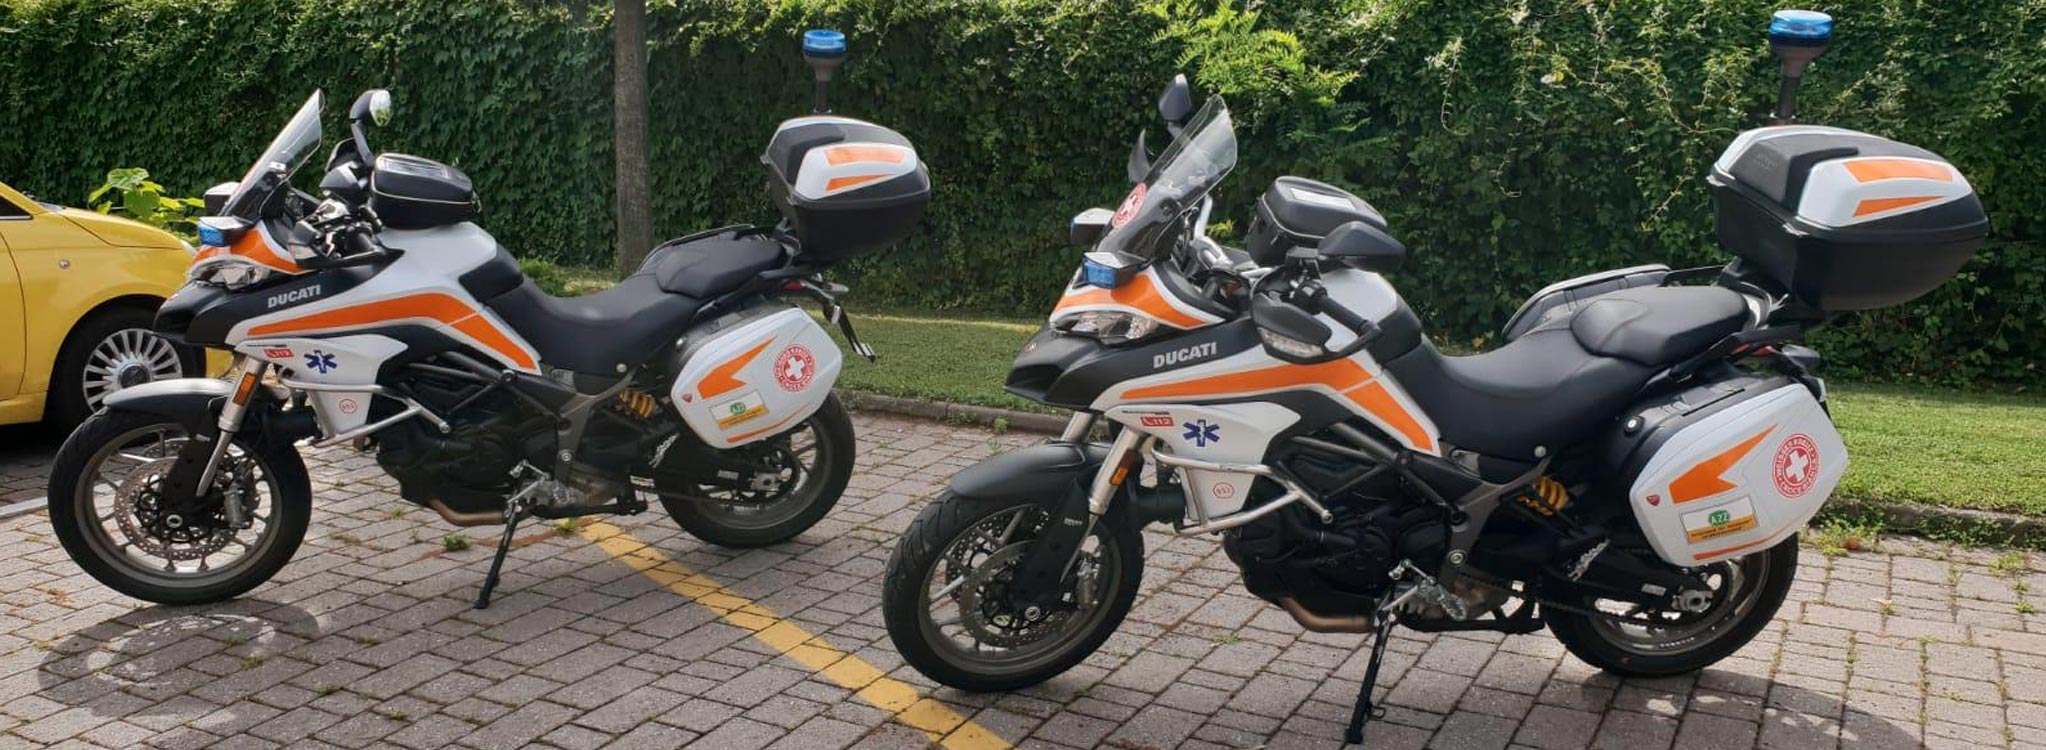 Ducati moto medica